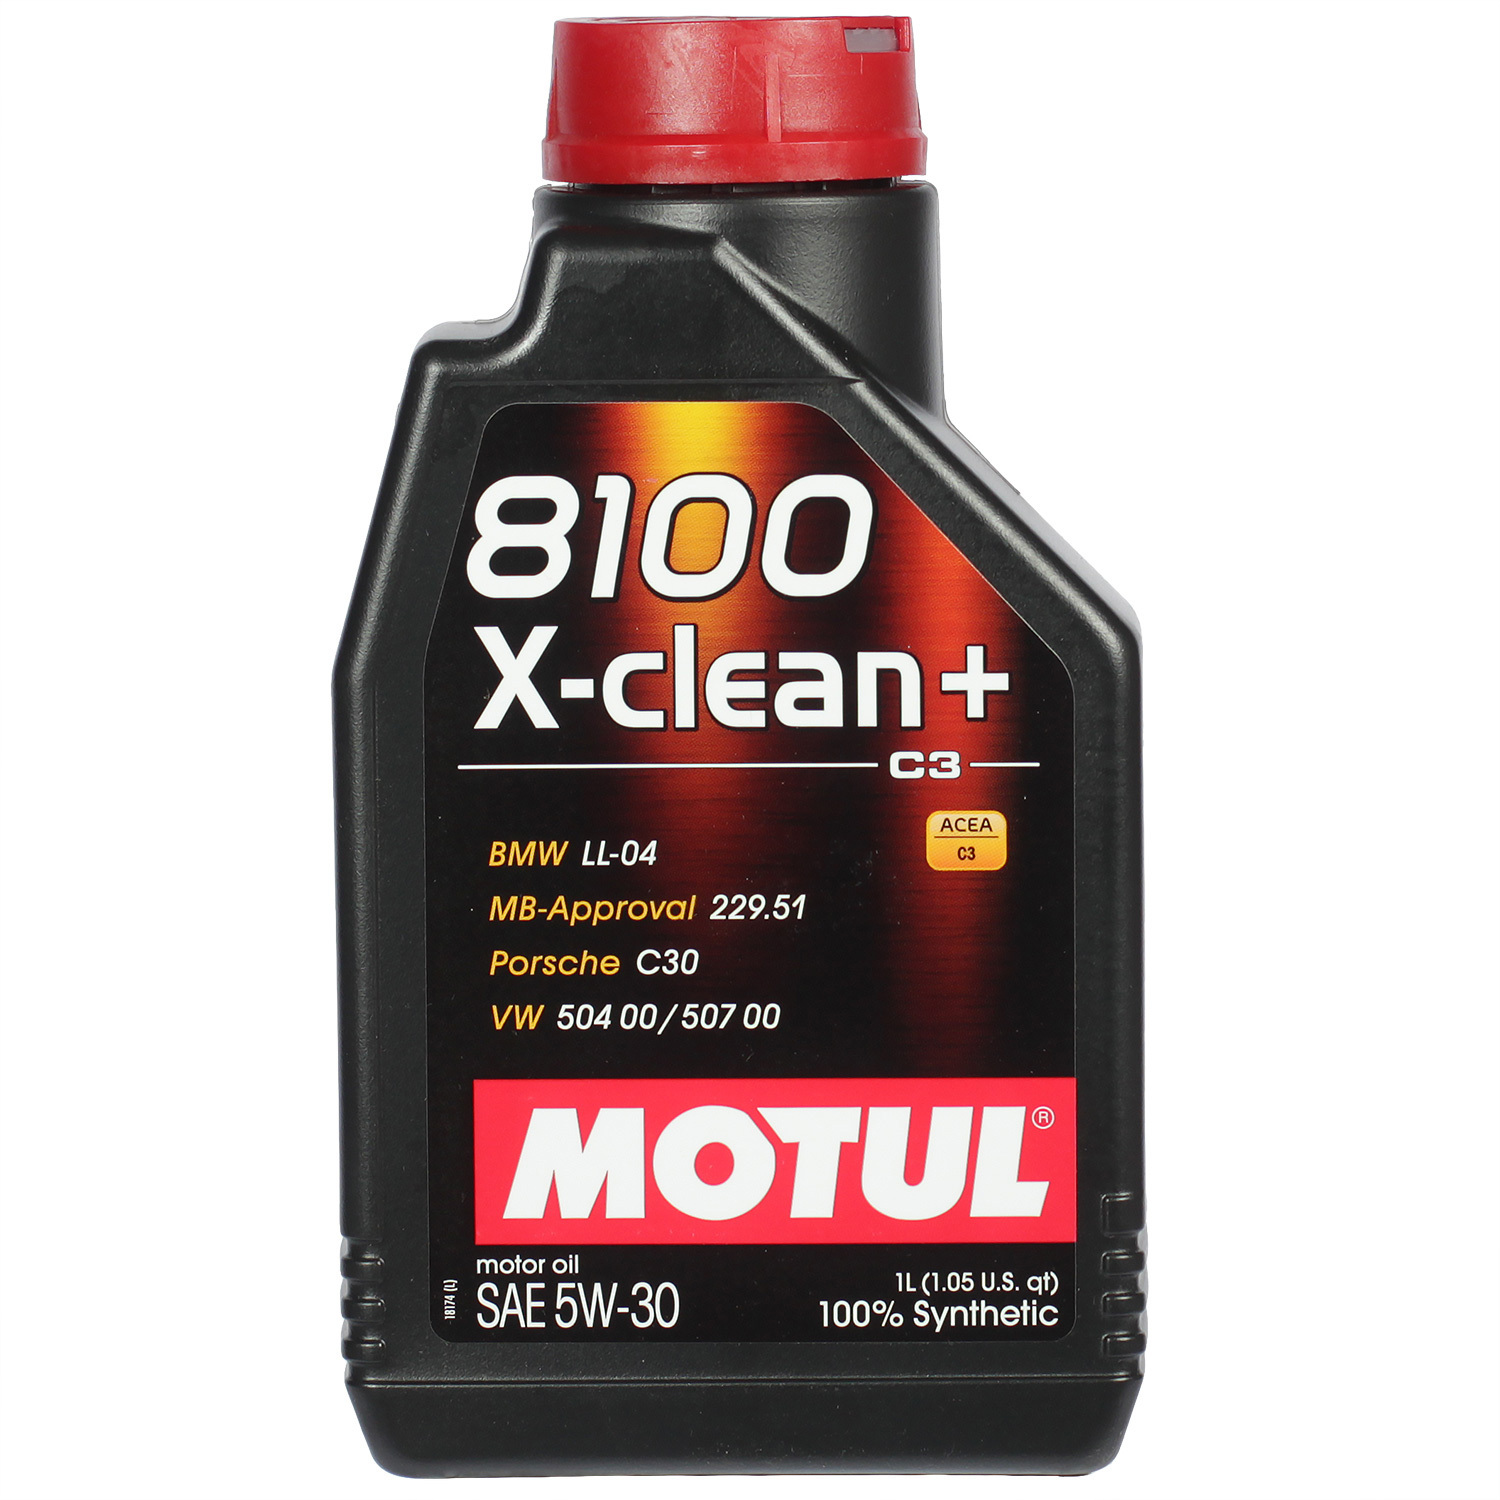 Motul Моторное масло Motul 8100 X-clean+ 5W-30, 1 л motul моторное масло motul specific 913d 5w 30 5 л